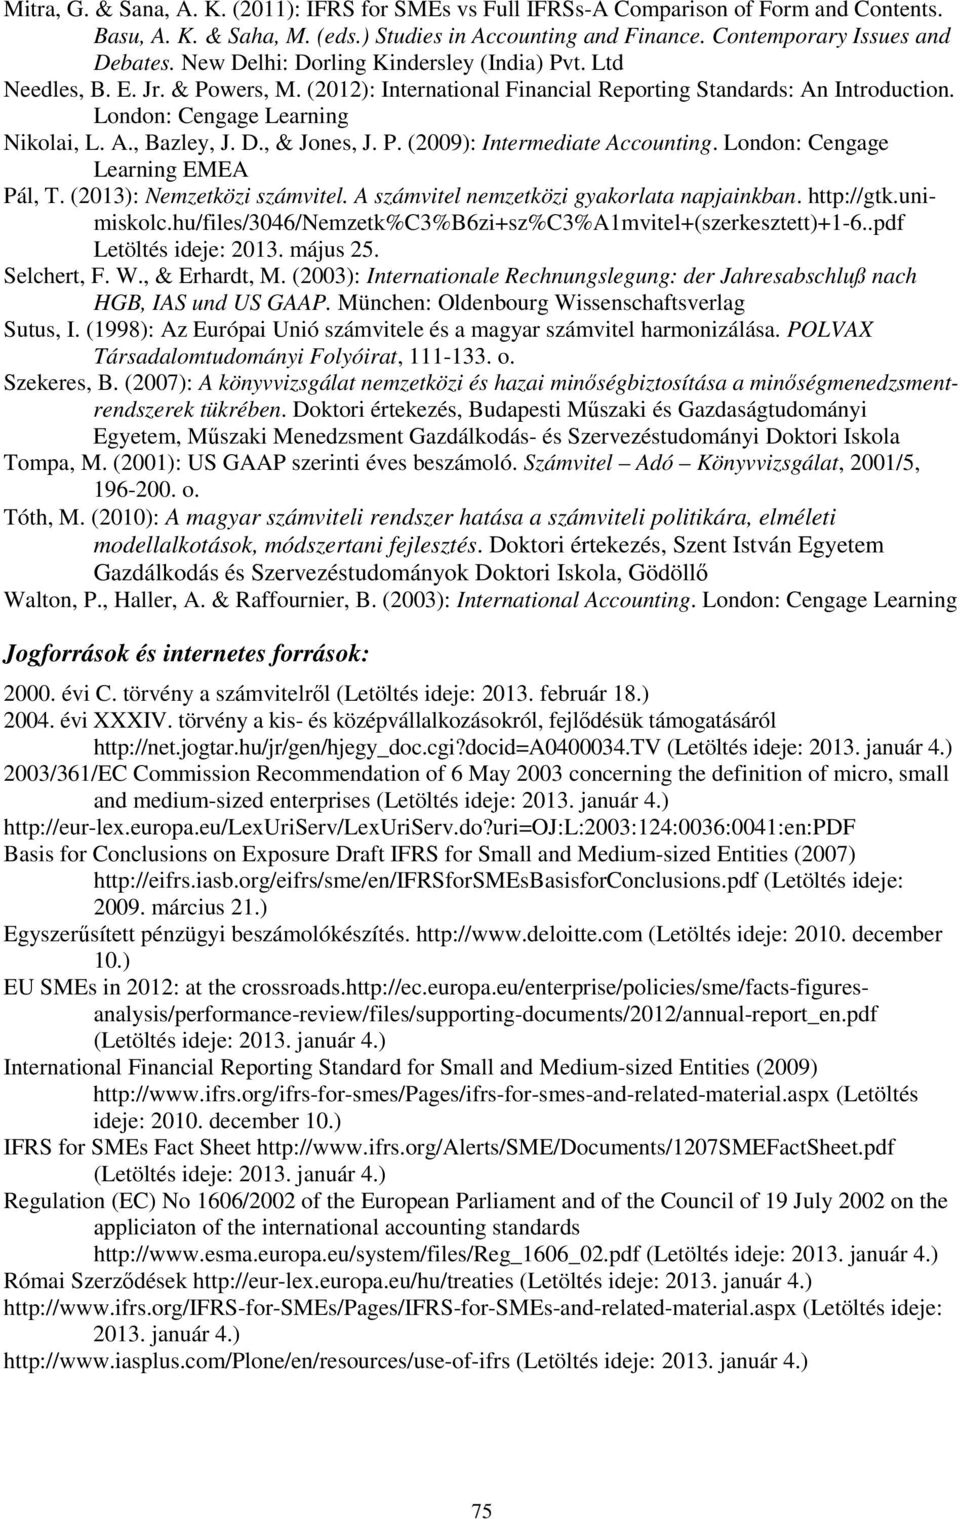 D., & Jones, J. P. (2009): Intermediate Accounting. London: Cengage Learning EMEA Pál, T. (2013): Nemzetközi számvitel. A számvitel nemzetközi gyakorlata napjainkban. http://gtk.unimiskolc.